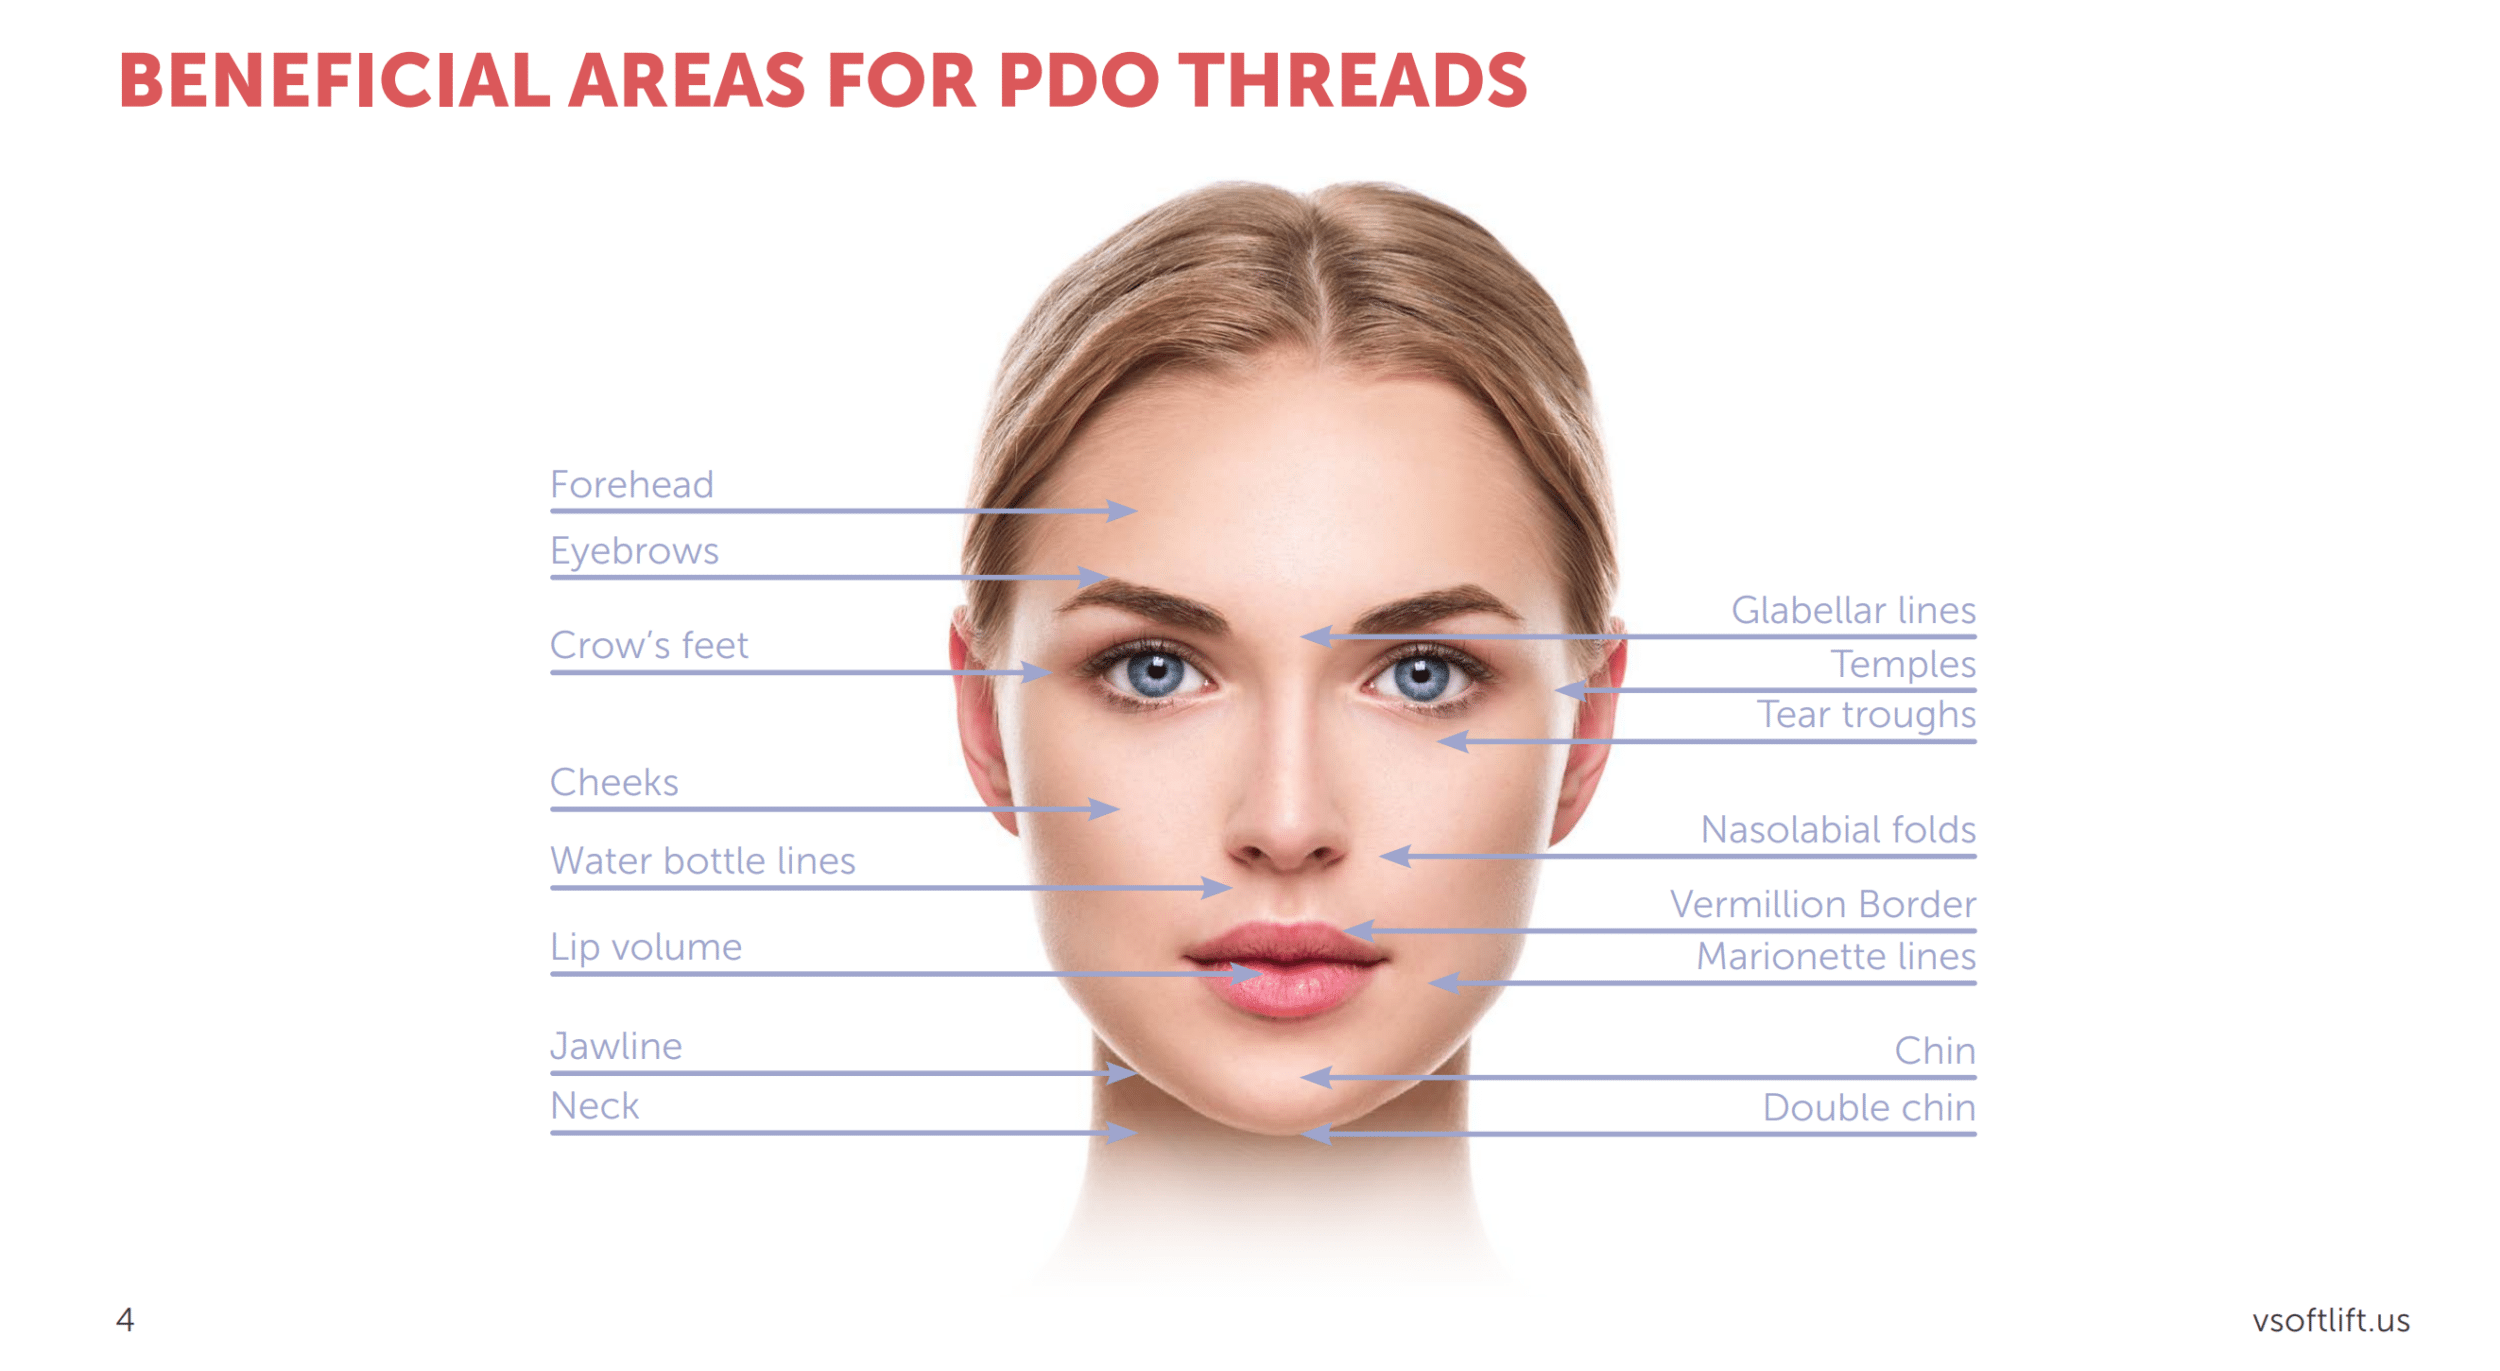 PDO treatment areas